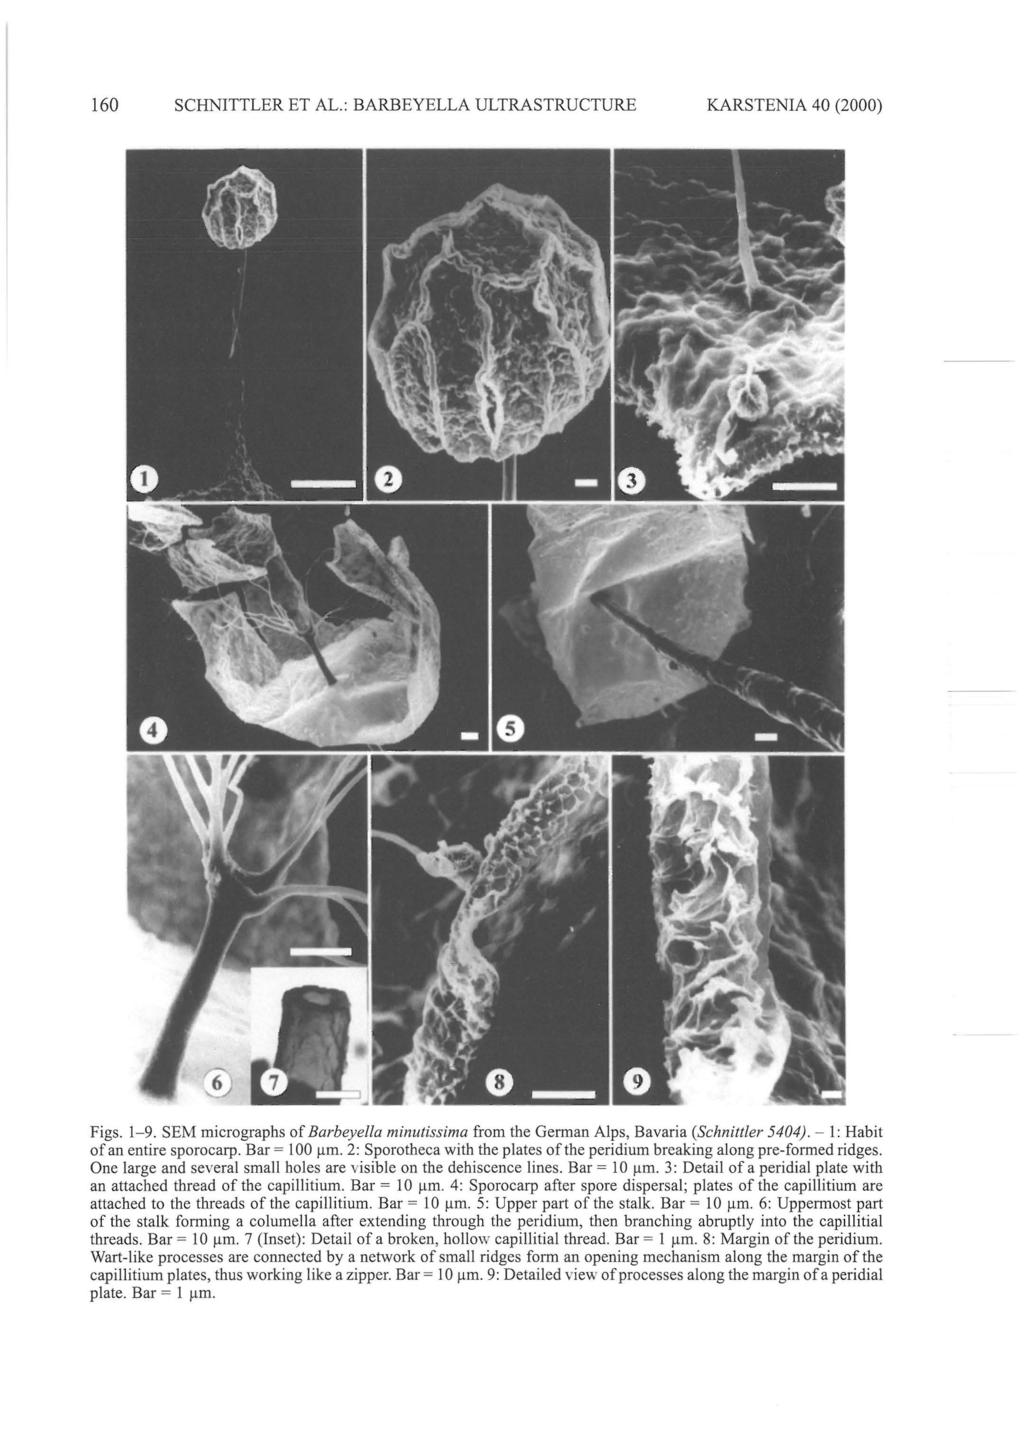 160 SCHNITTLER ET AL.: BARBEYELLA ULTRASTRUCTURE KARSTENIA 40 (2000) Figs. 1-9. SEM micrographs of Barbeyella minulissima from the German Alps, Bavaria (Schnilller 5404).